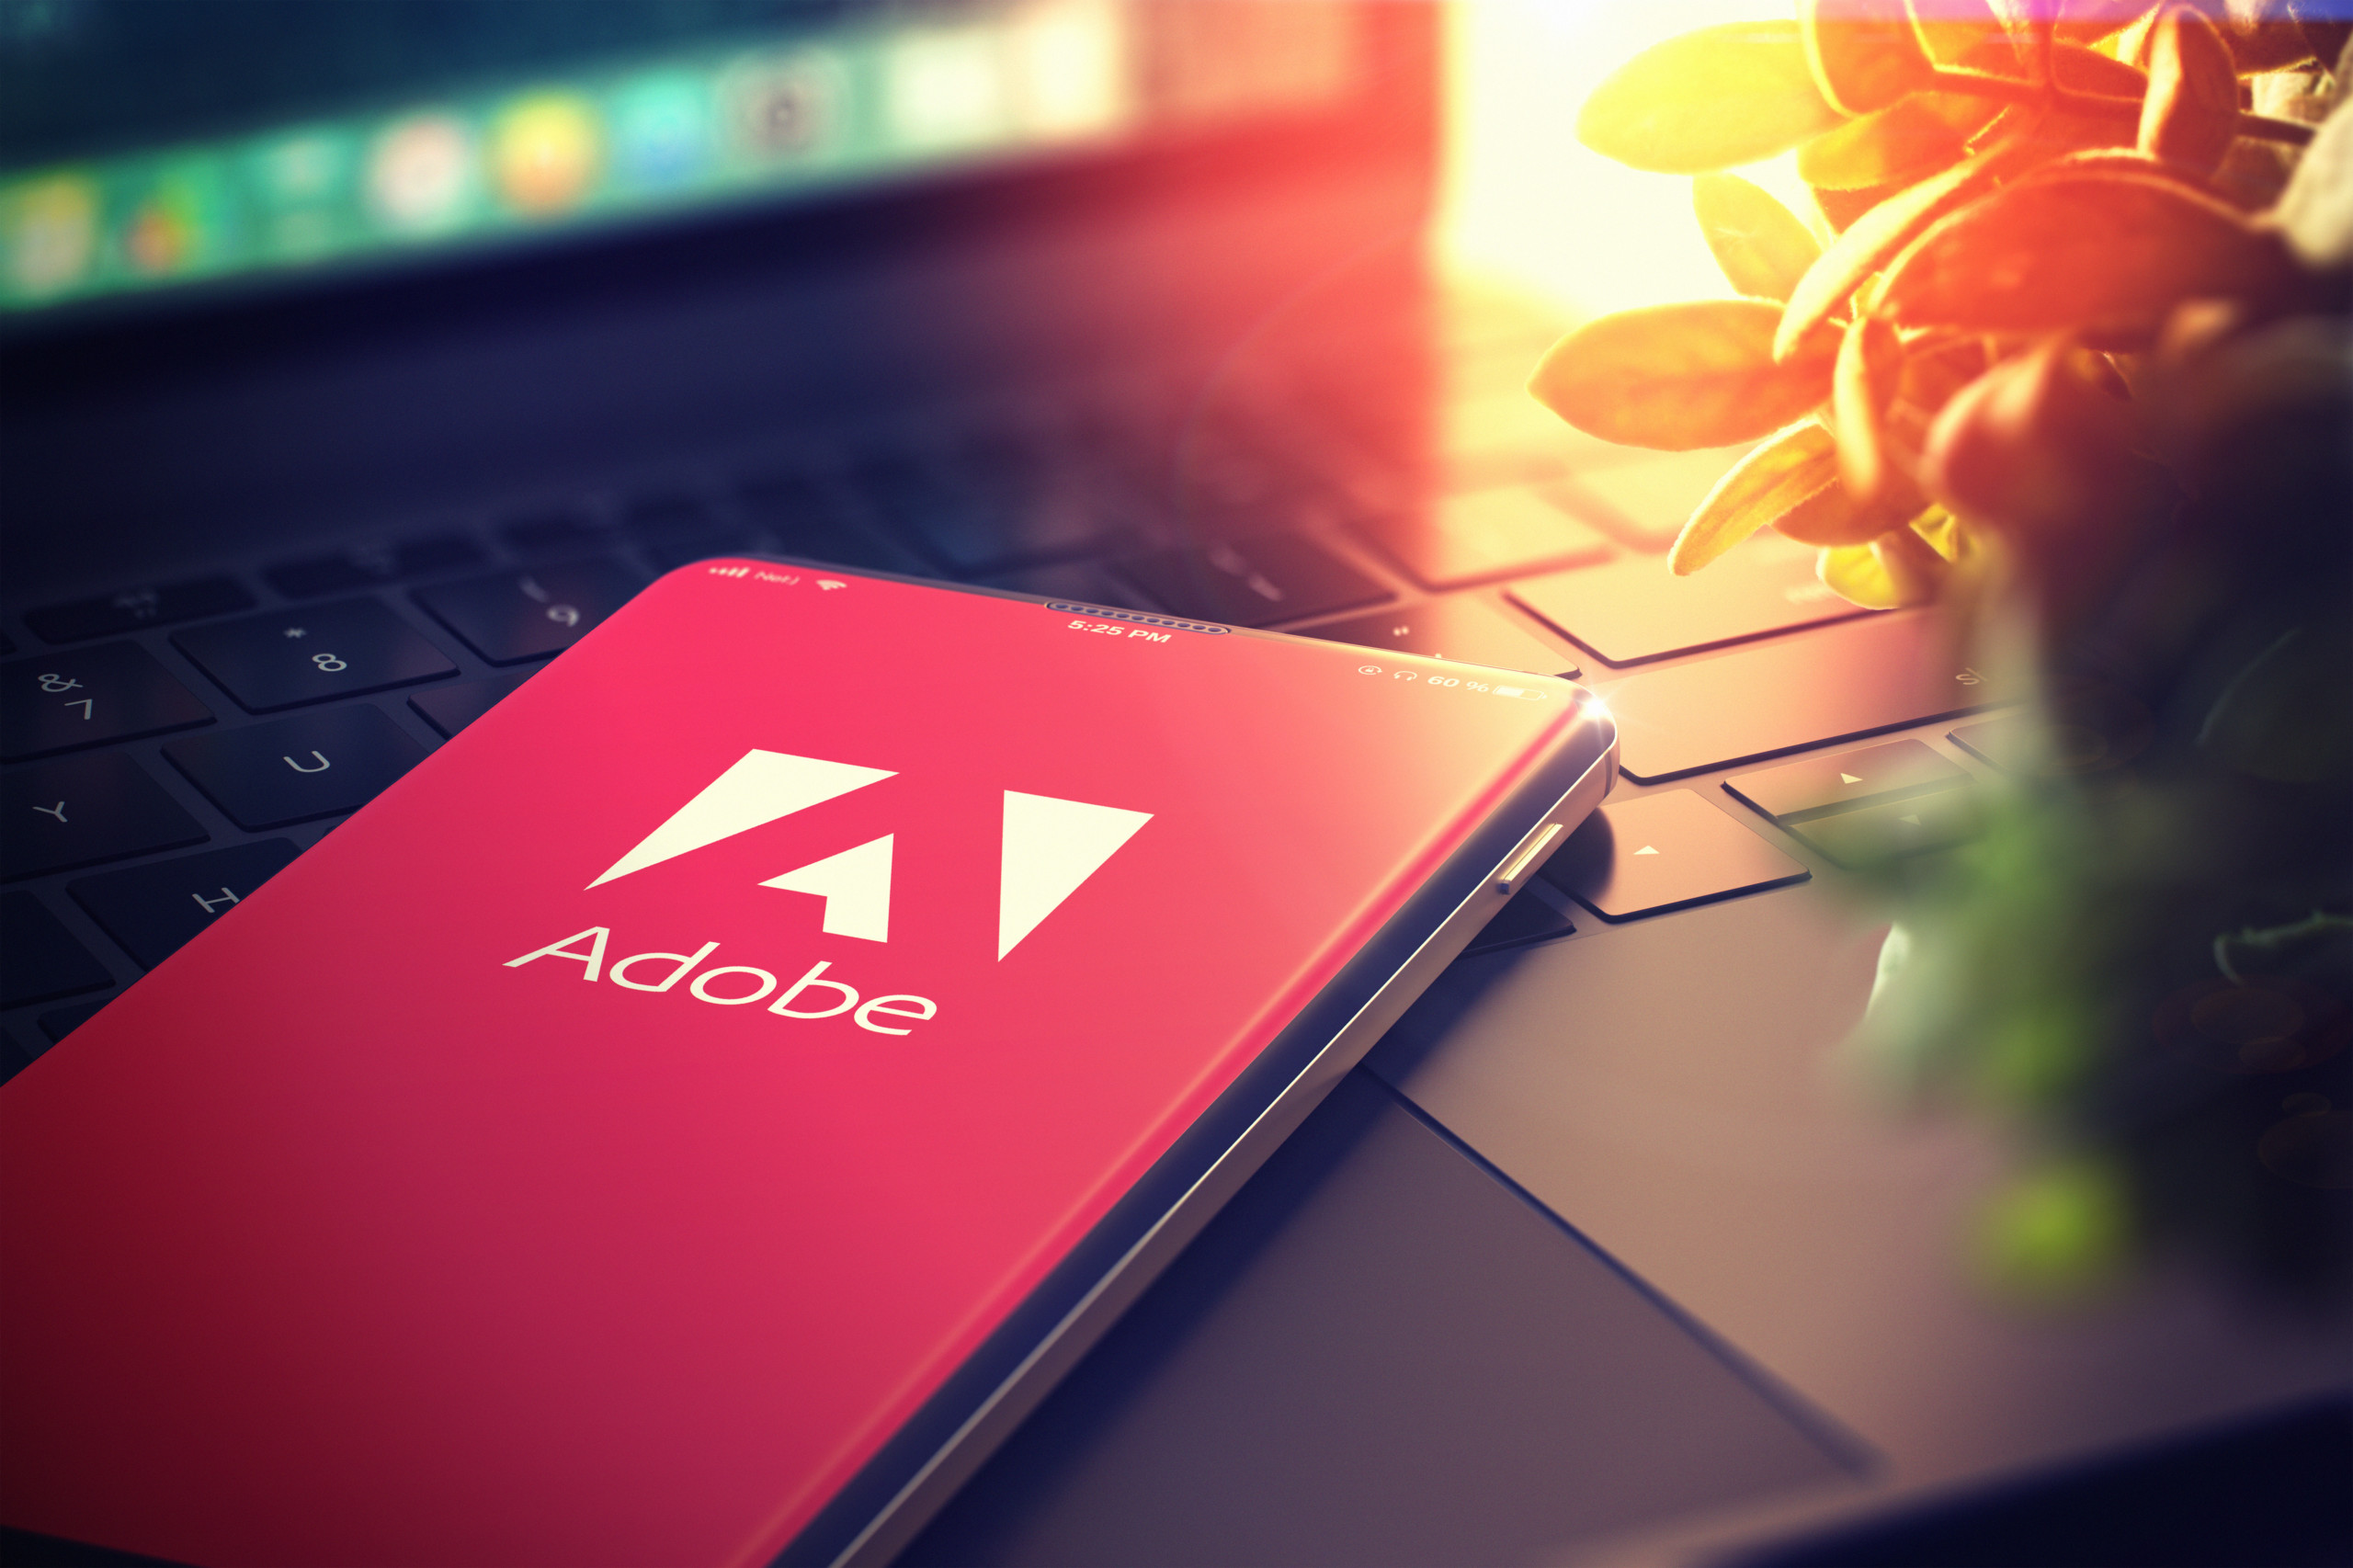 Adobe liefert starke Quartalszahlen, doch senkt seine Prognose